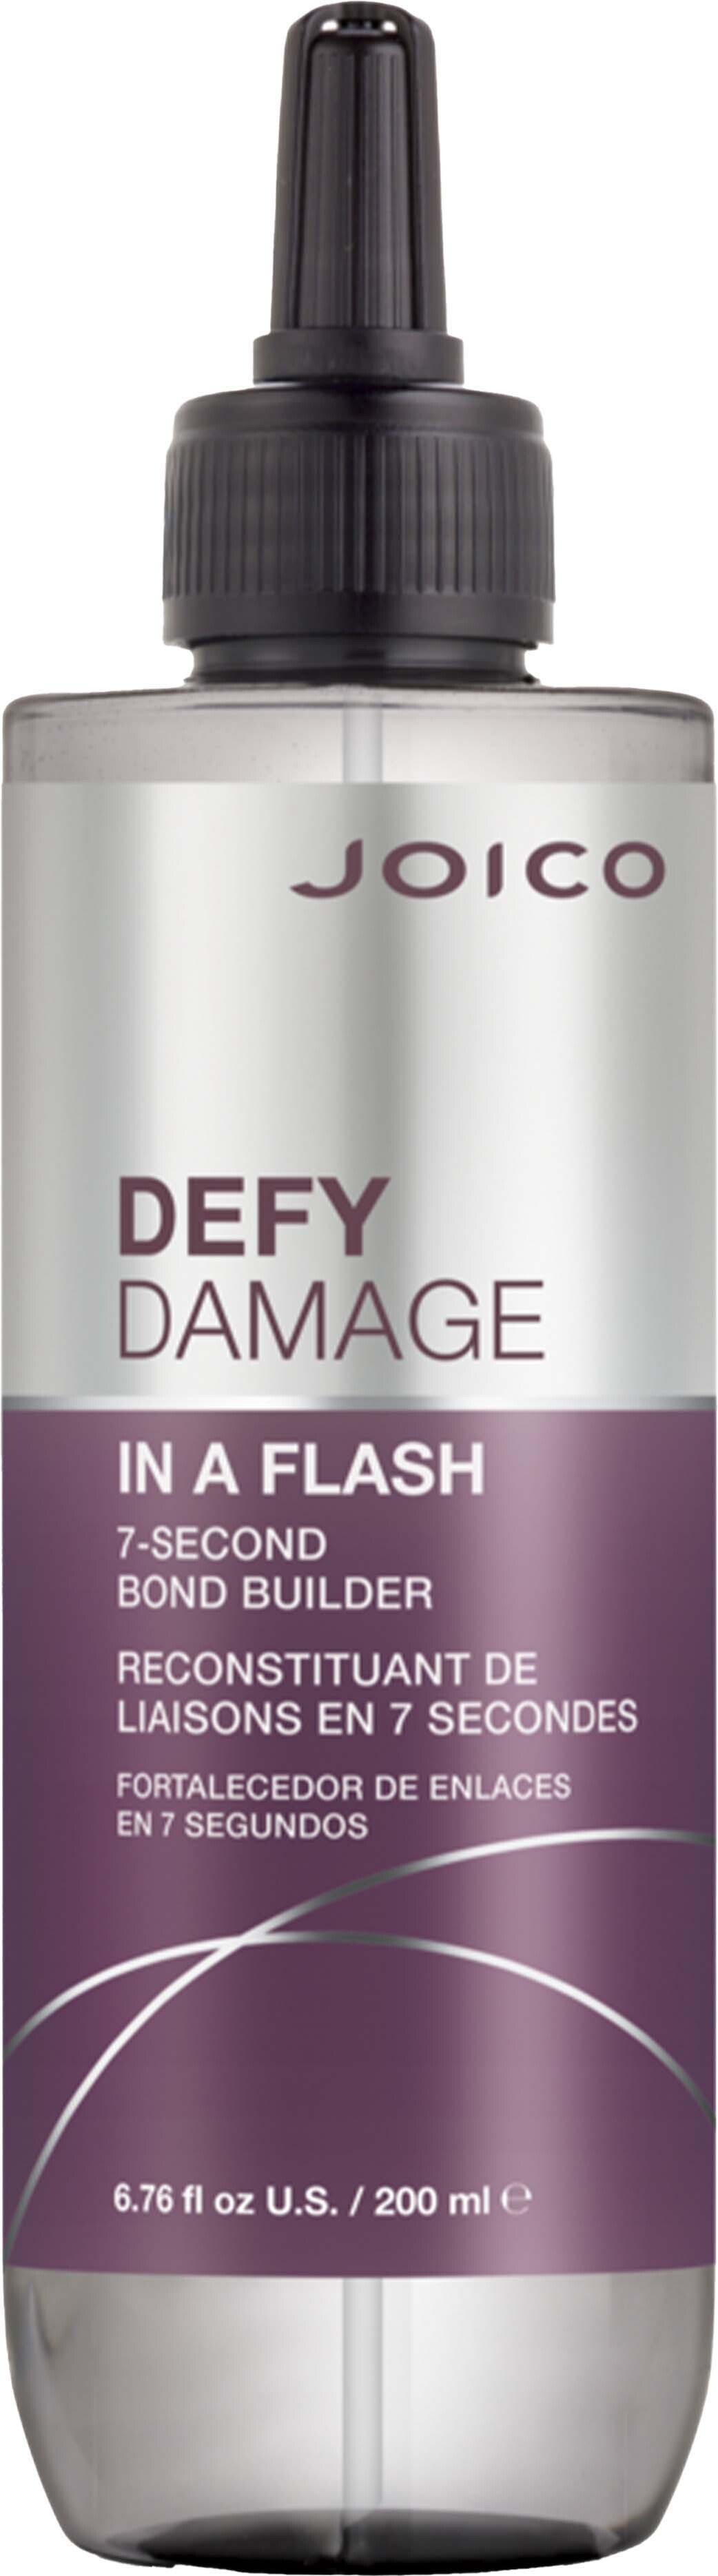 Joico Defy Damage In A Flash (7-sec bond builder) 200 ml